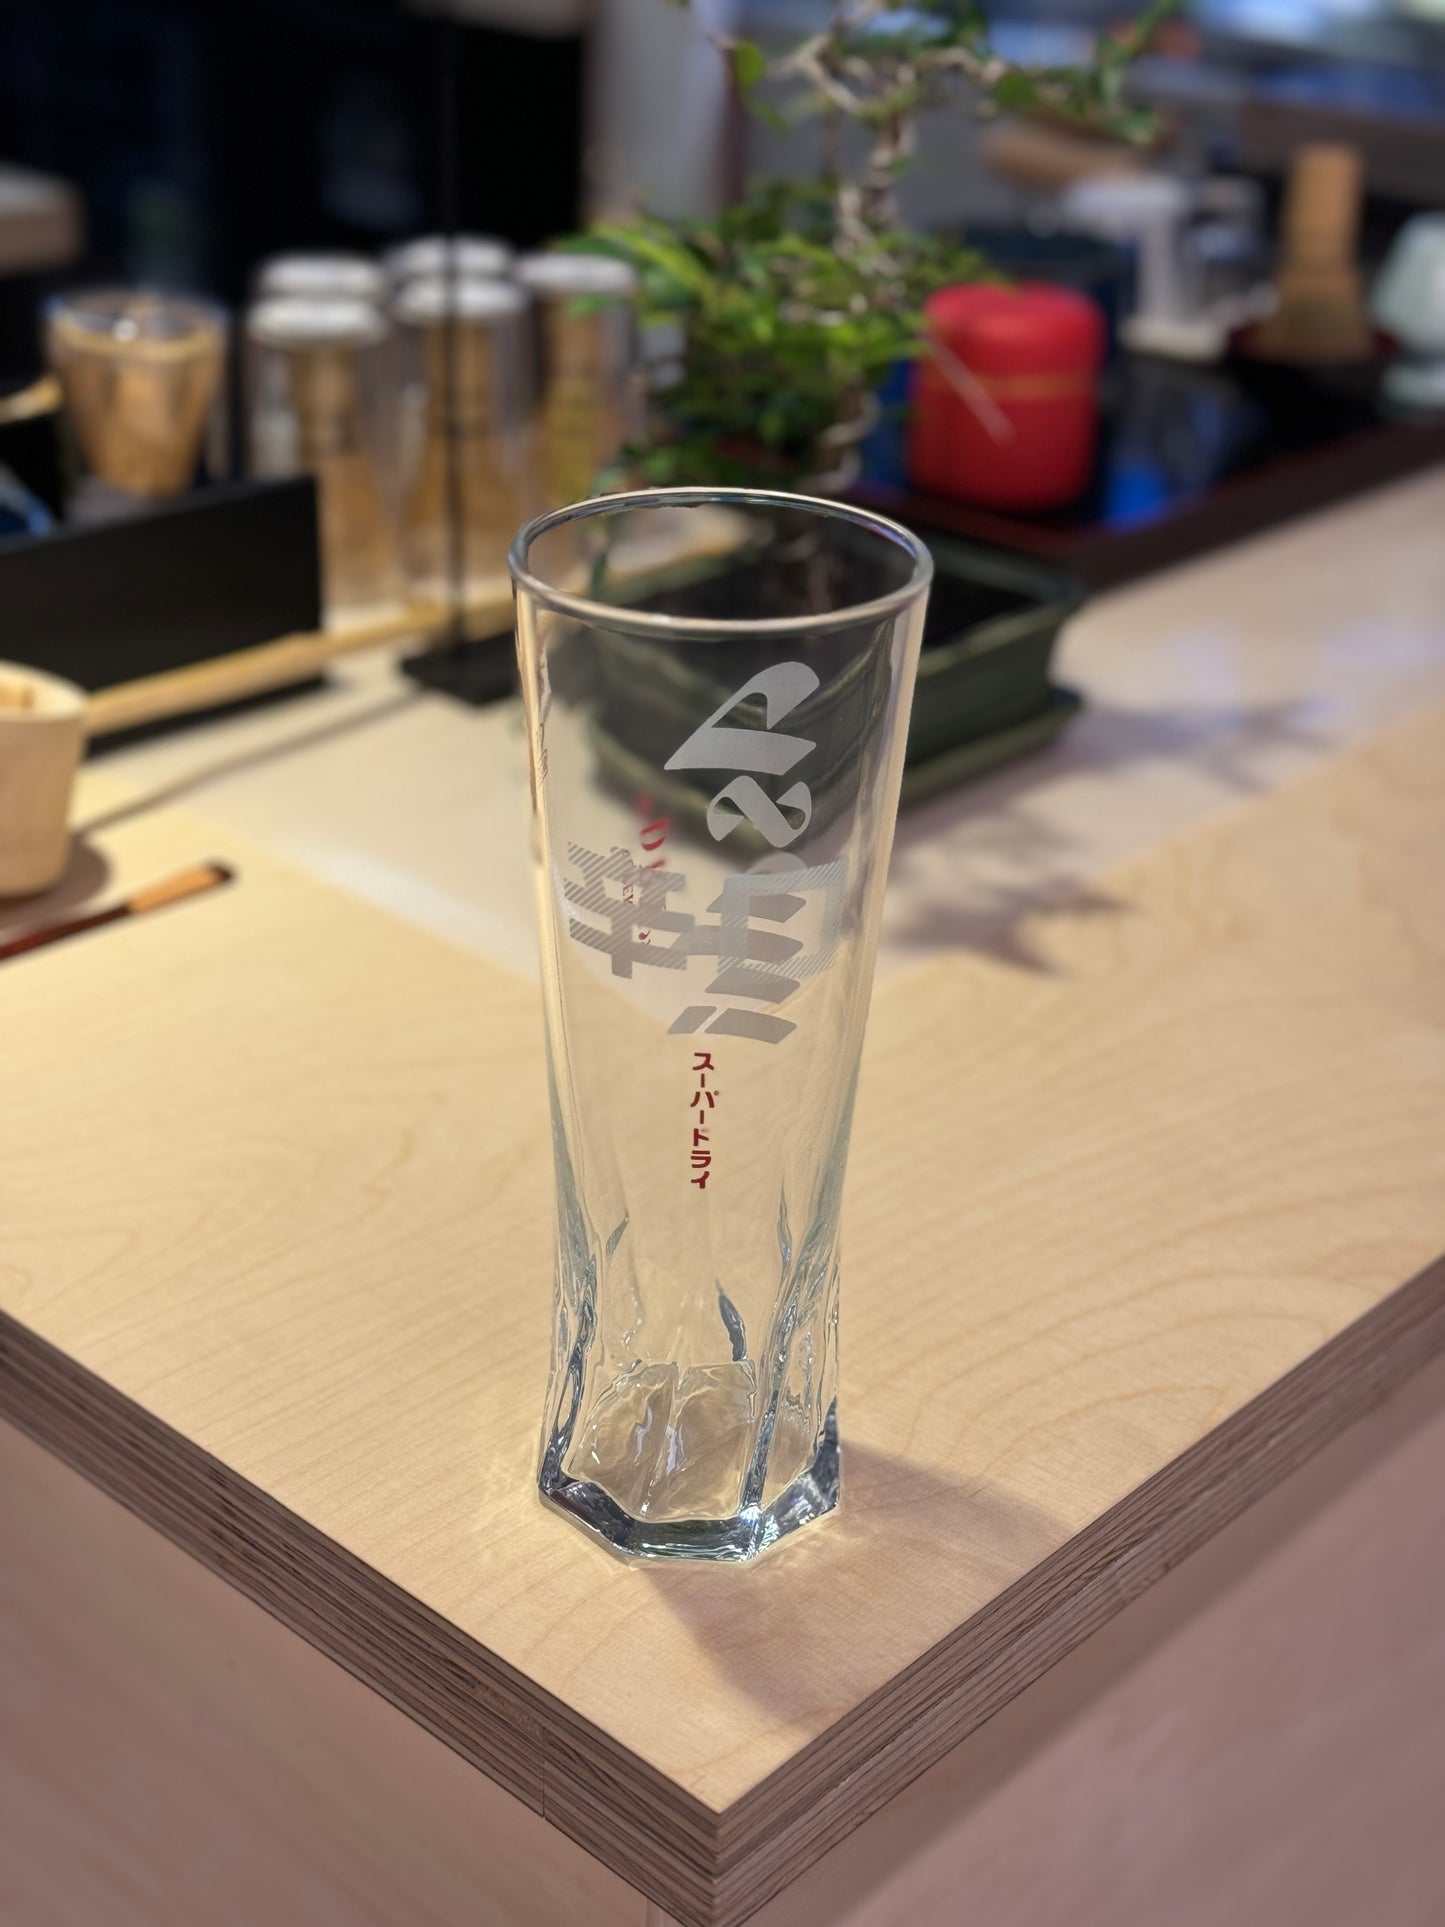 Asahi beer glass 50cl